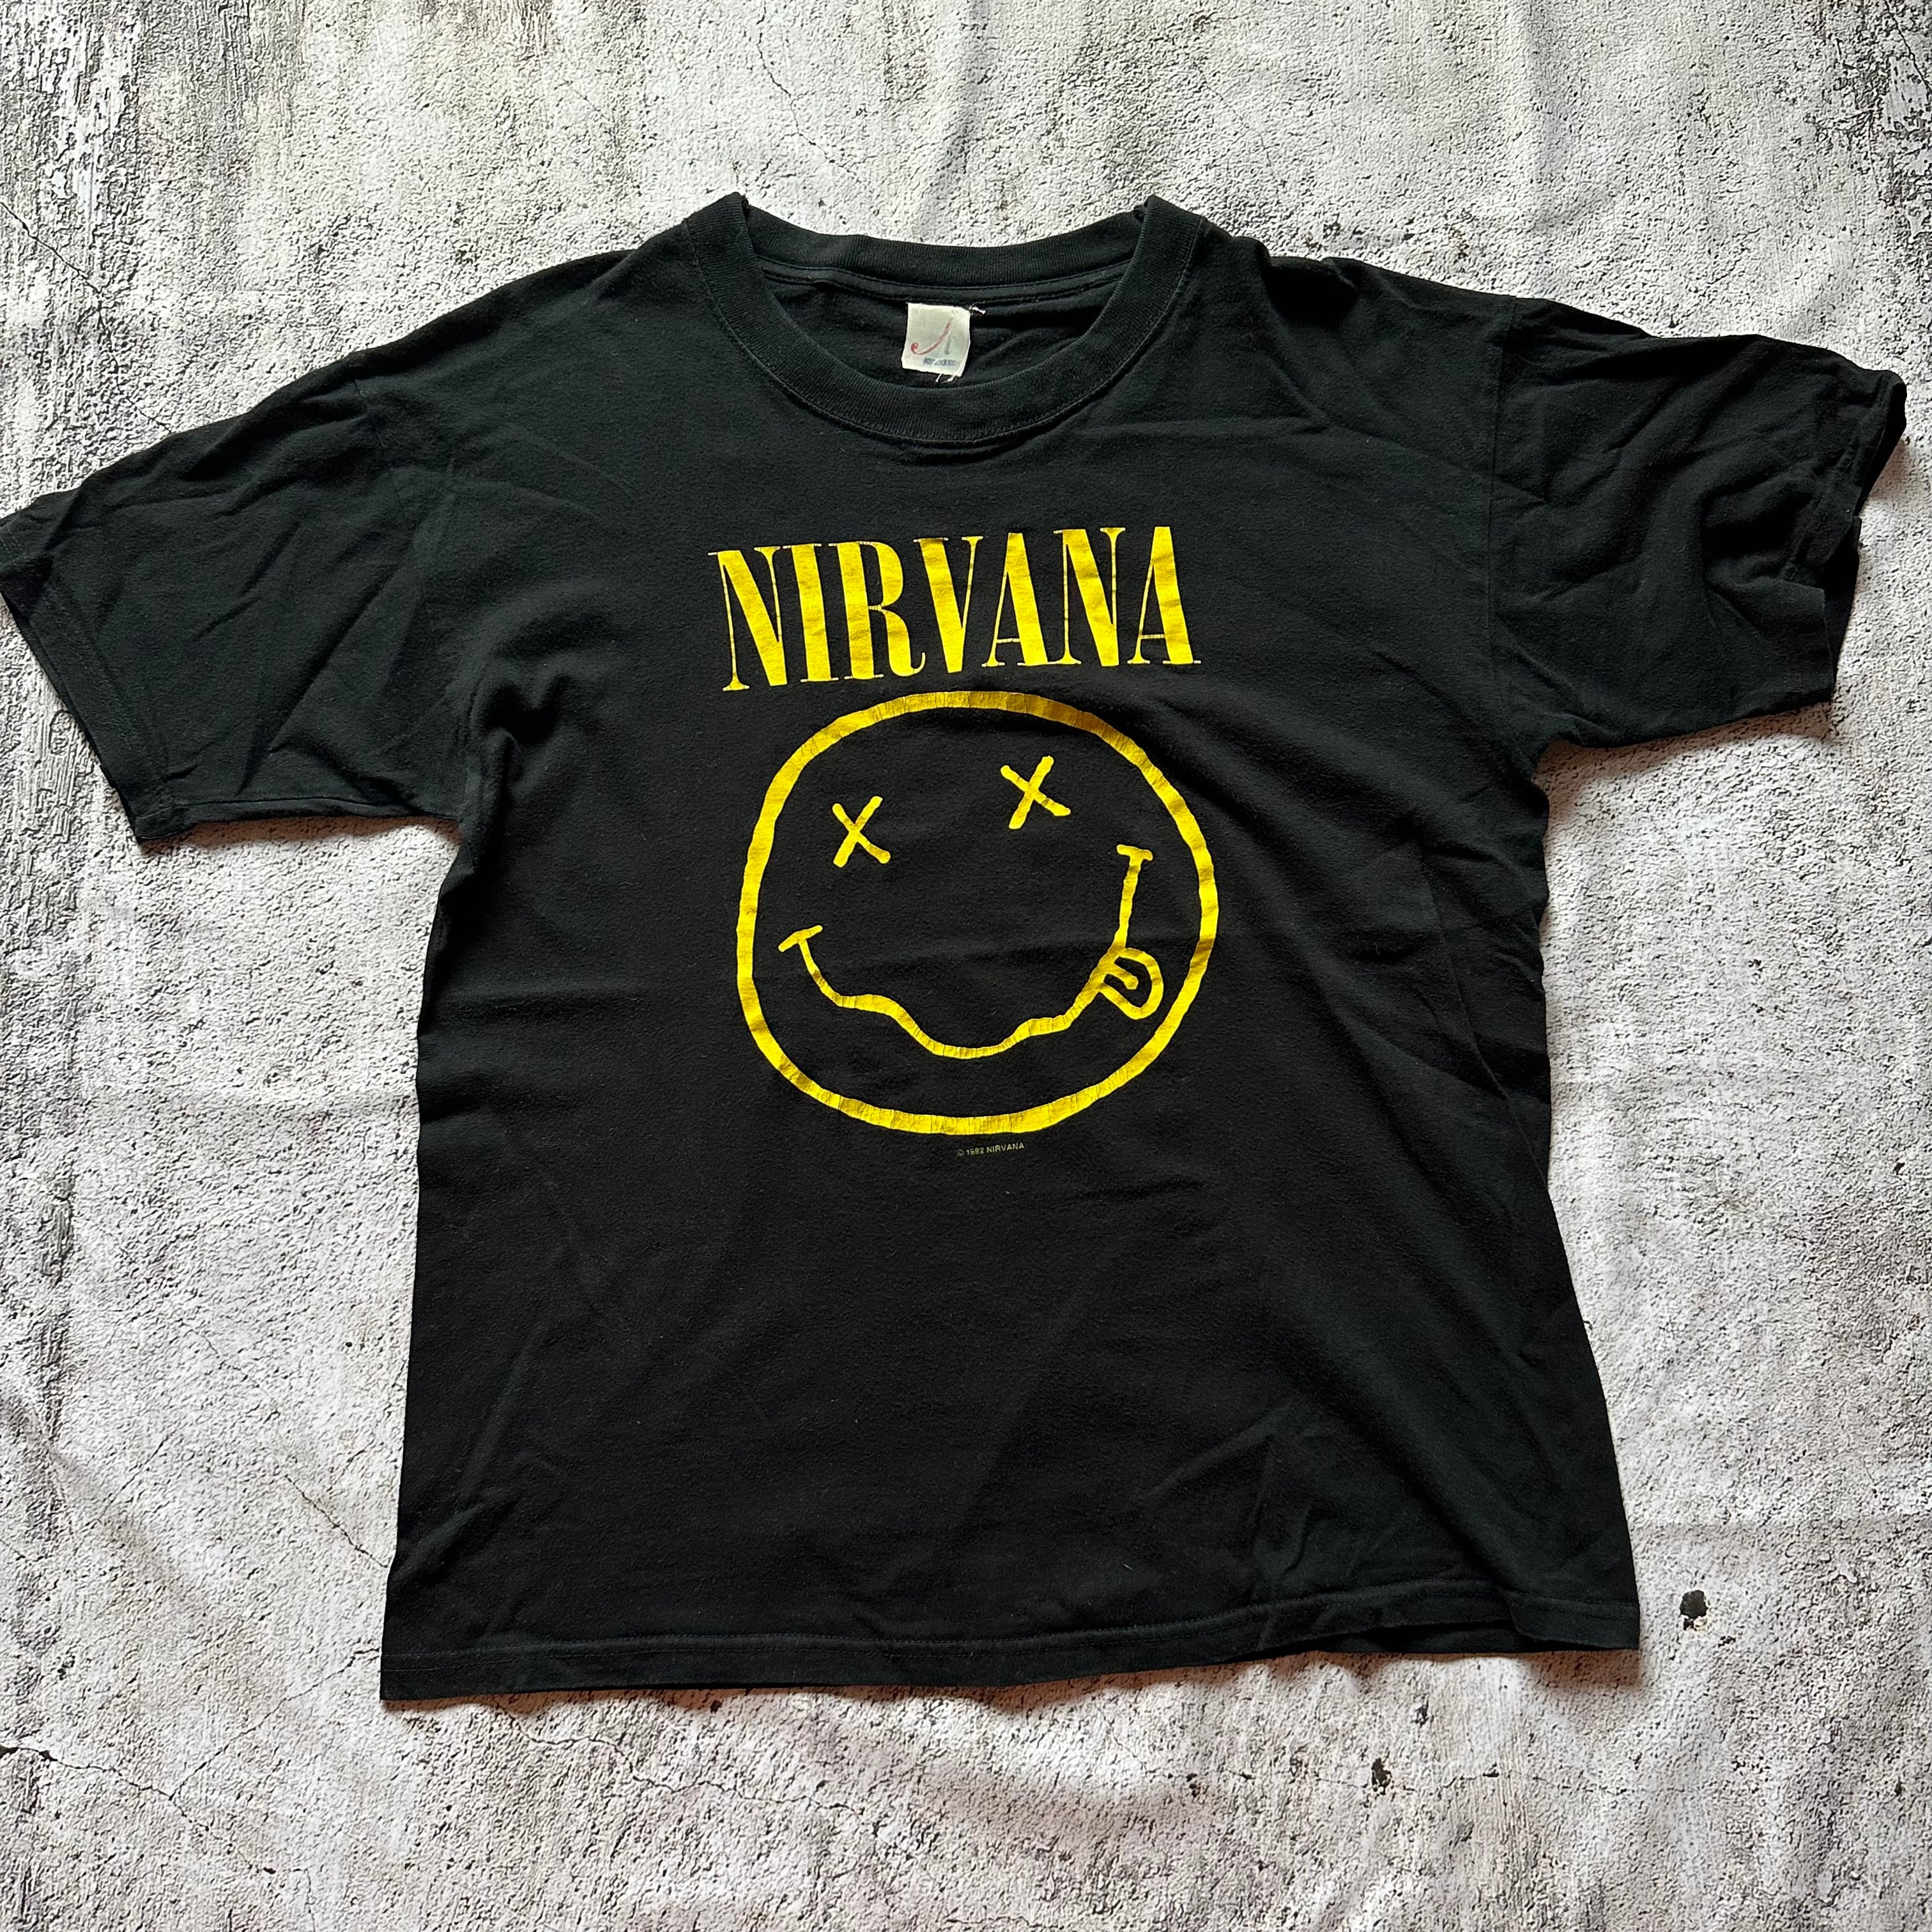 Nirvana ‘smile’ tee ニルヴァーナ ヴィンテージT  Lサイズ